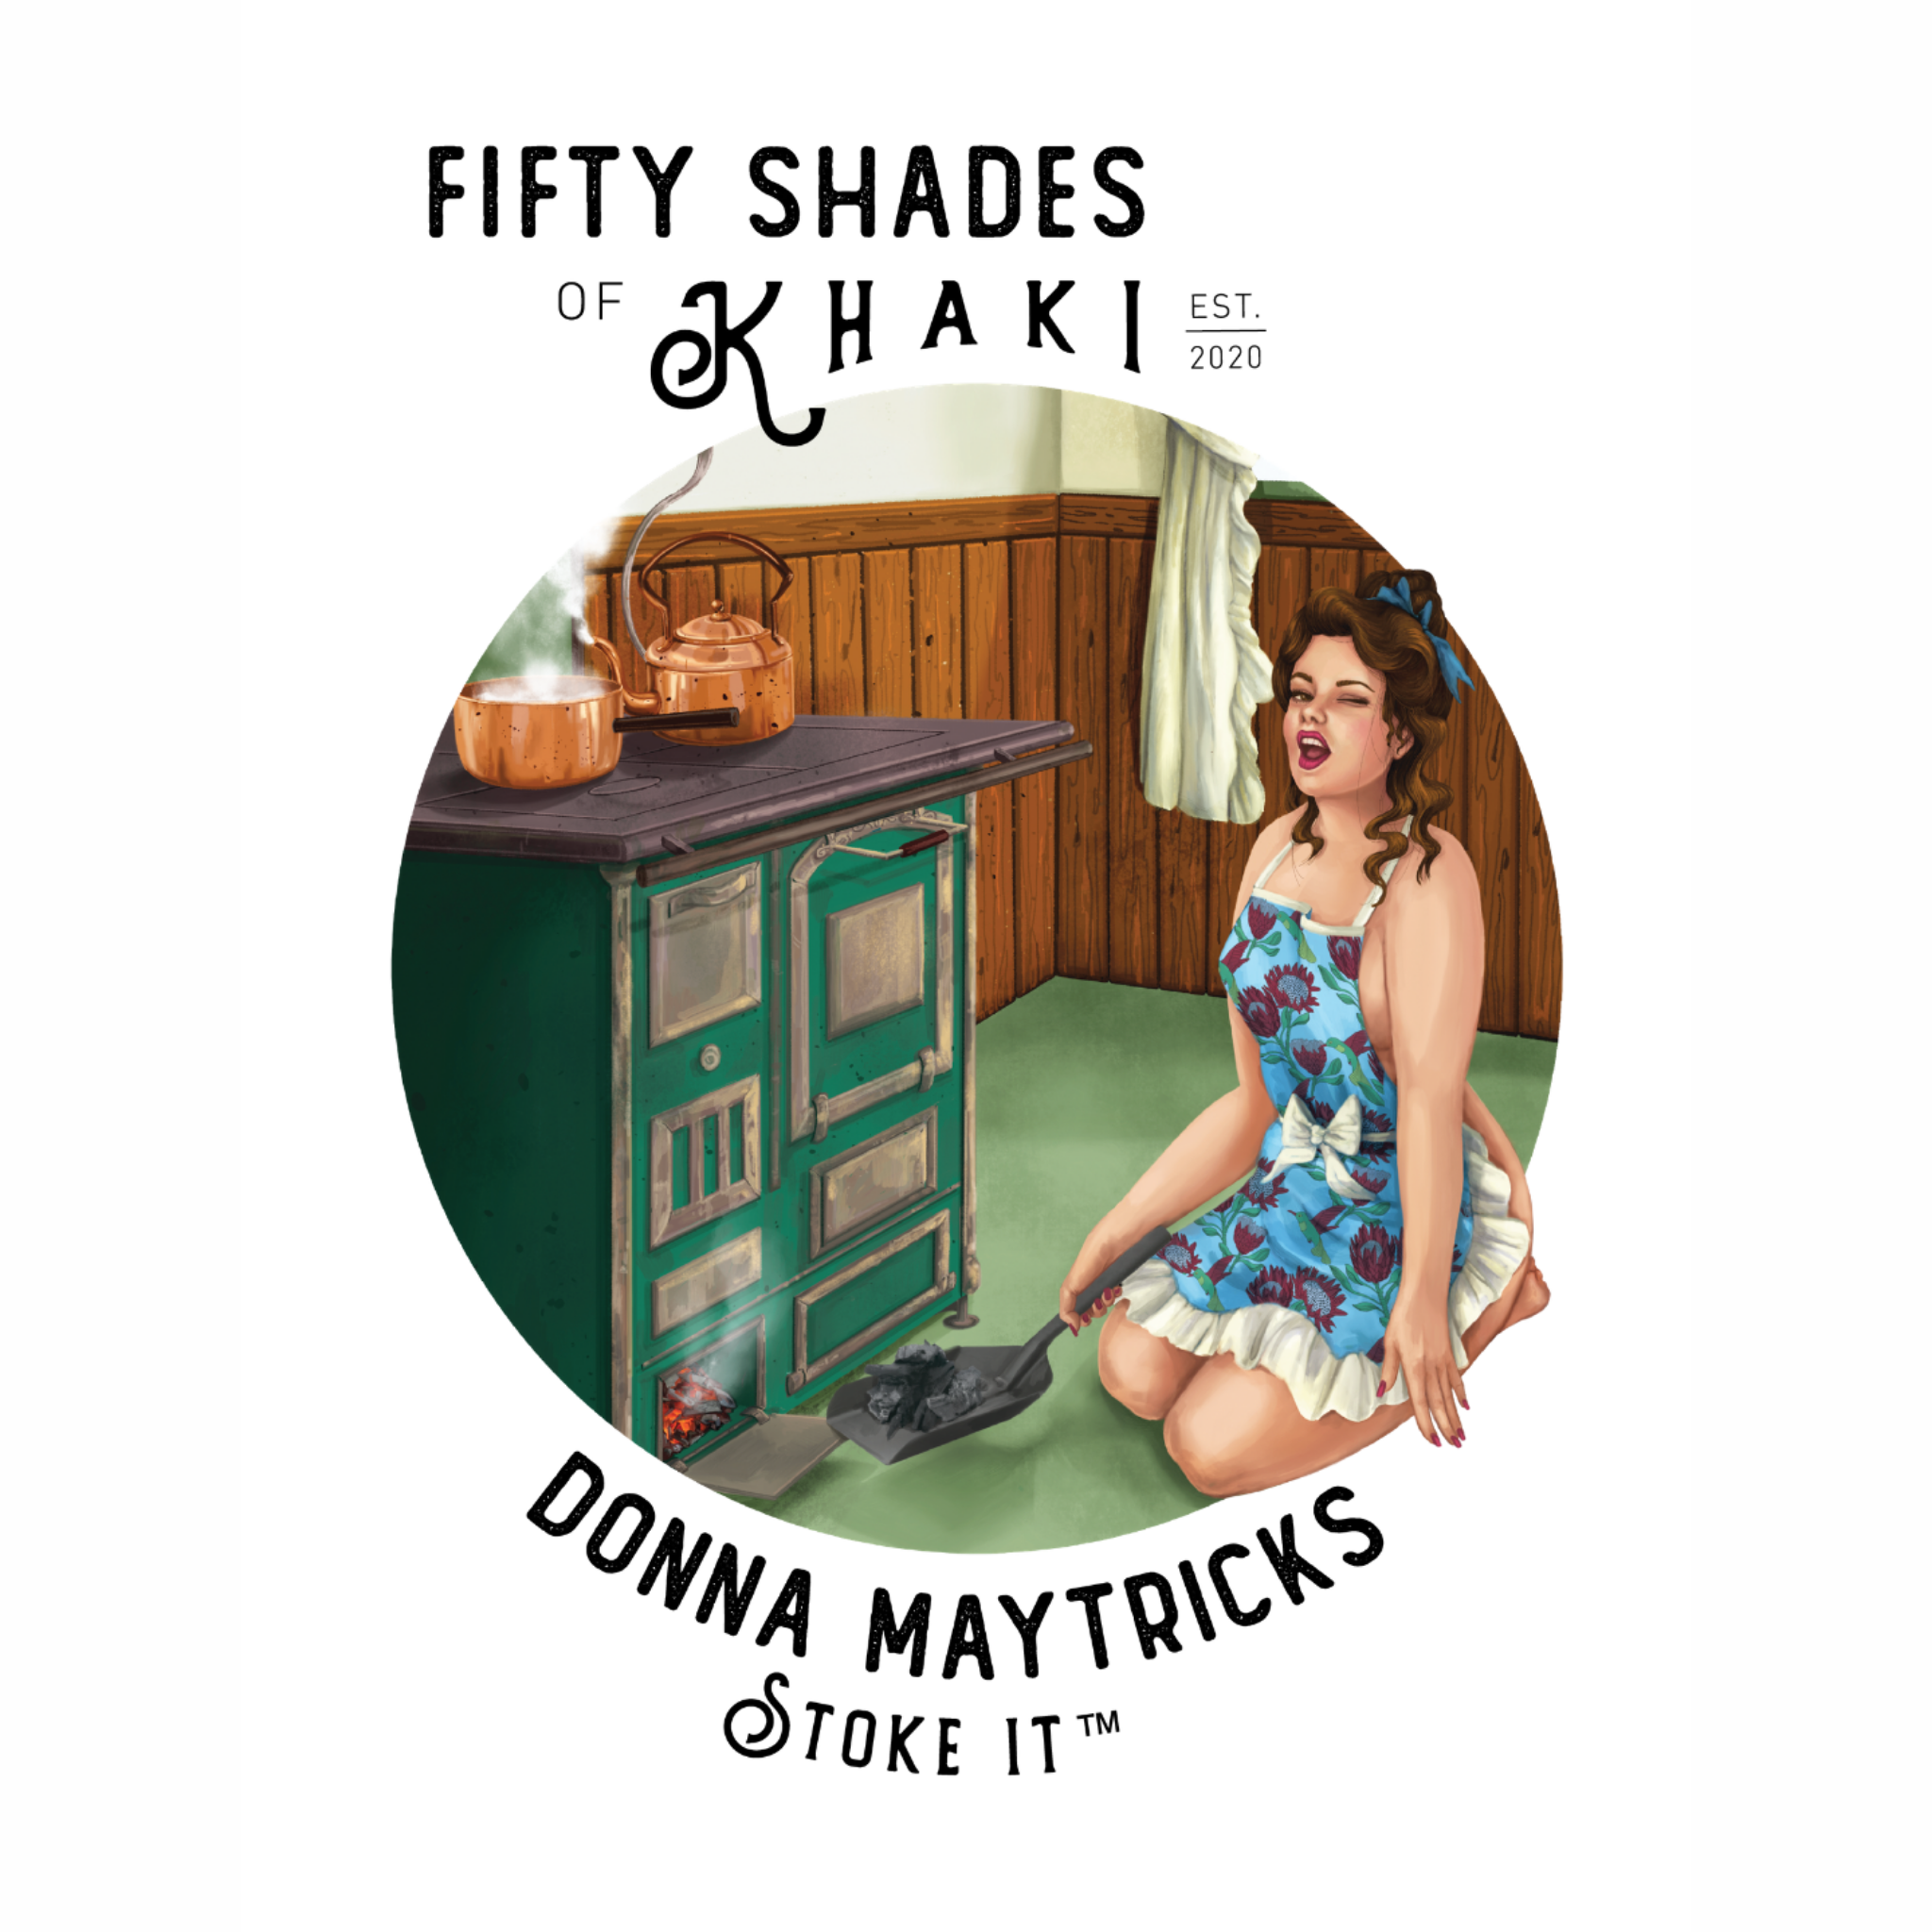 'STOKE IT' - aprons Donna Maytricks